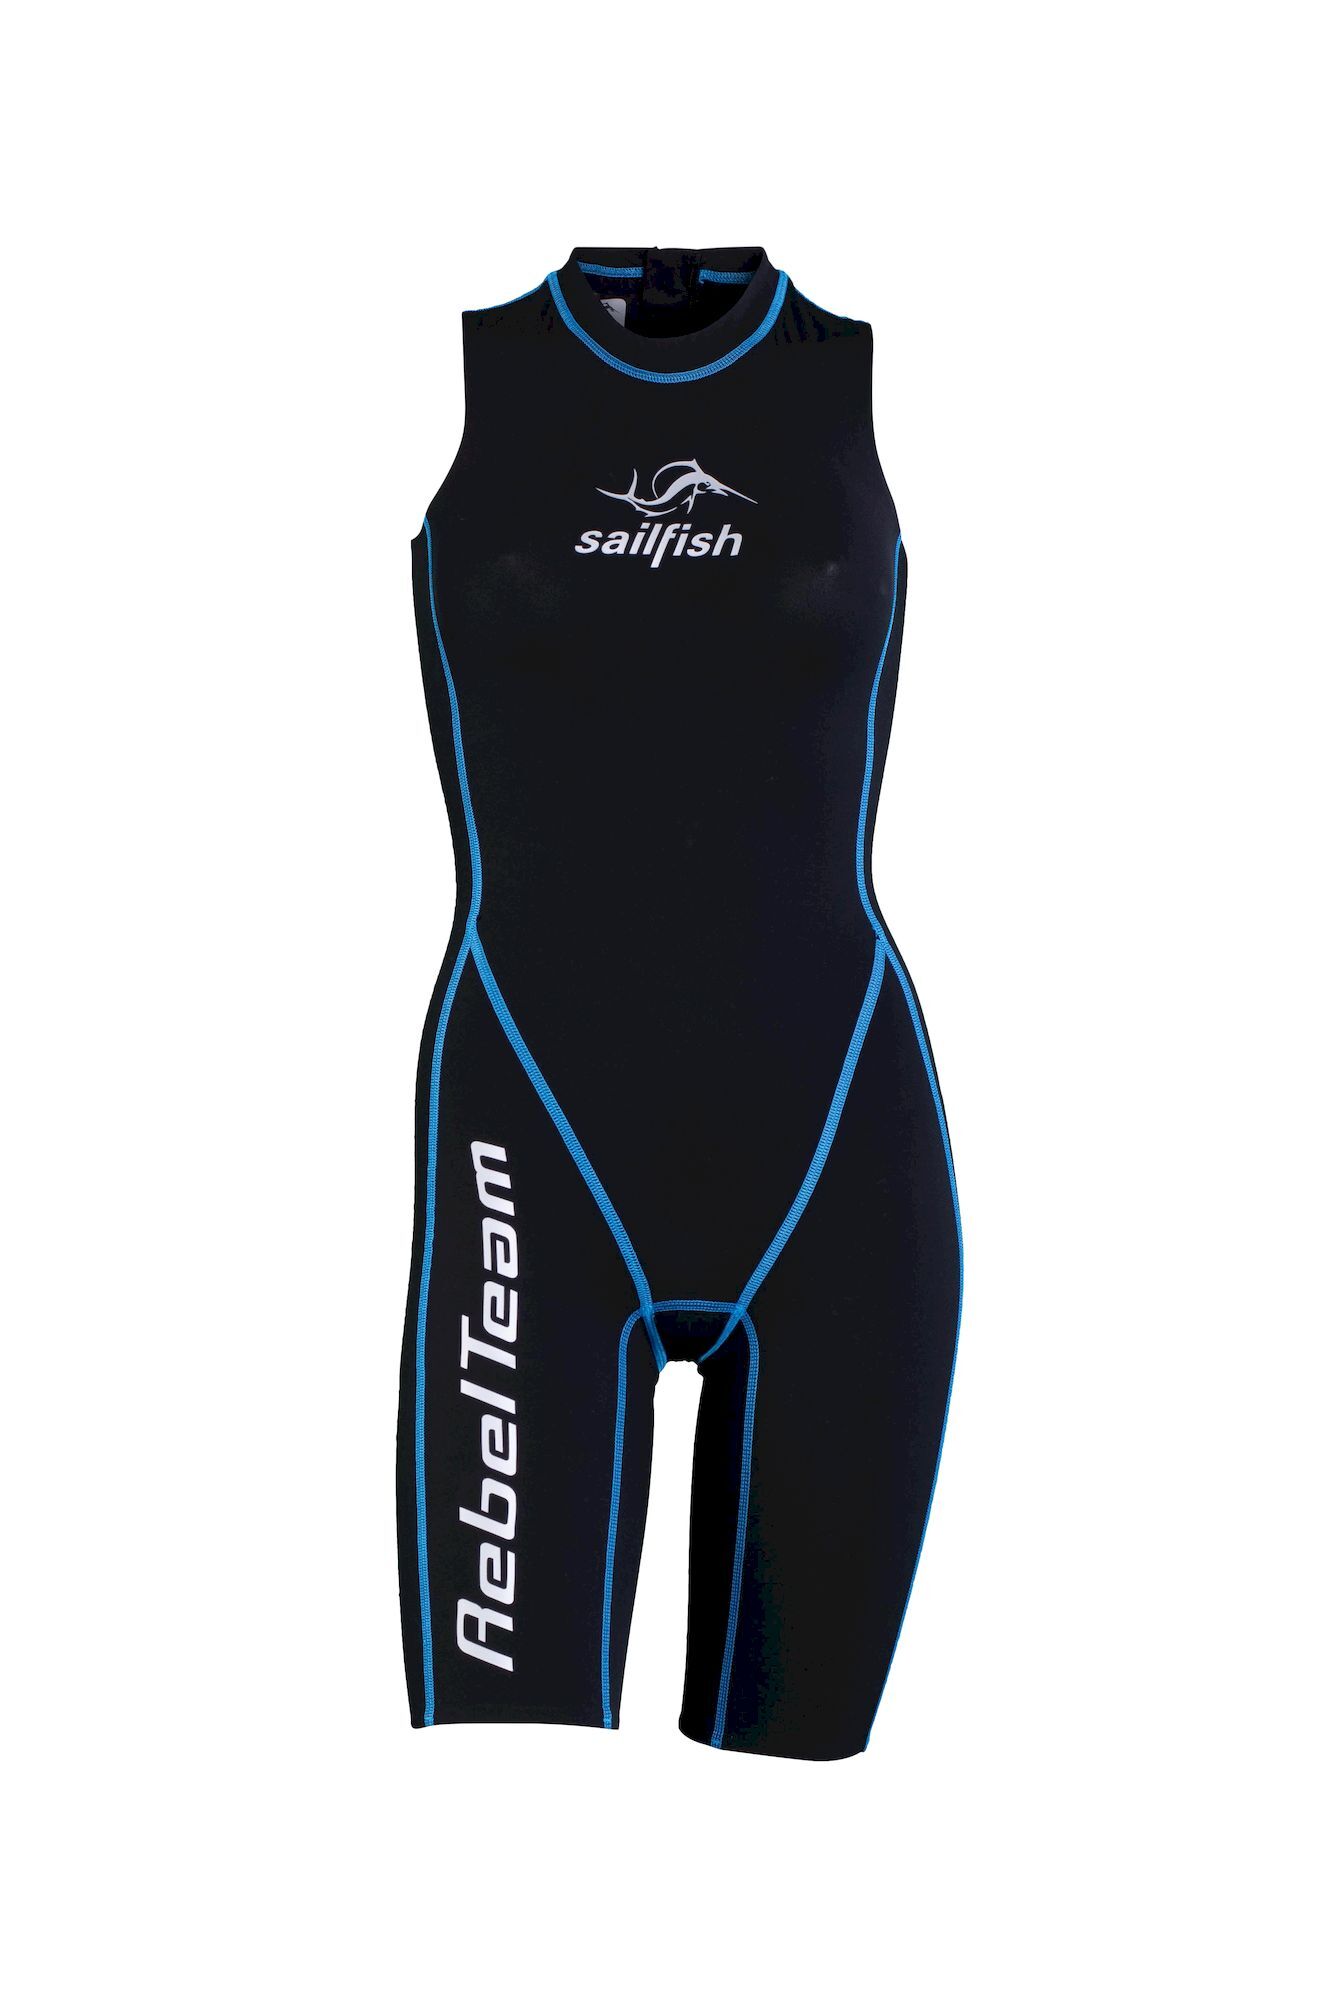 Sailfish Womens Swimskin Rebel Team 3 - Triathlon anzug - Damen | Hardloop